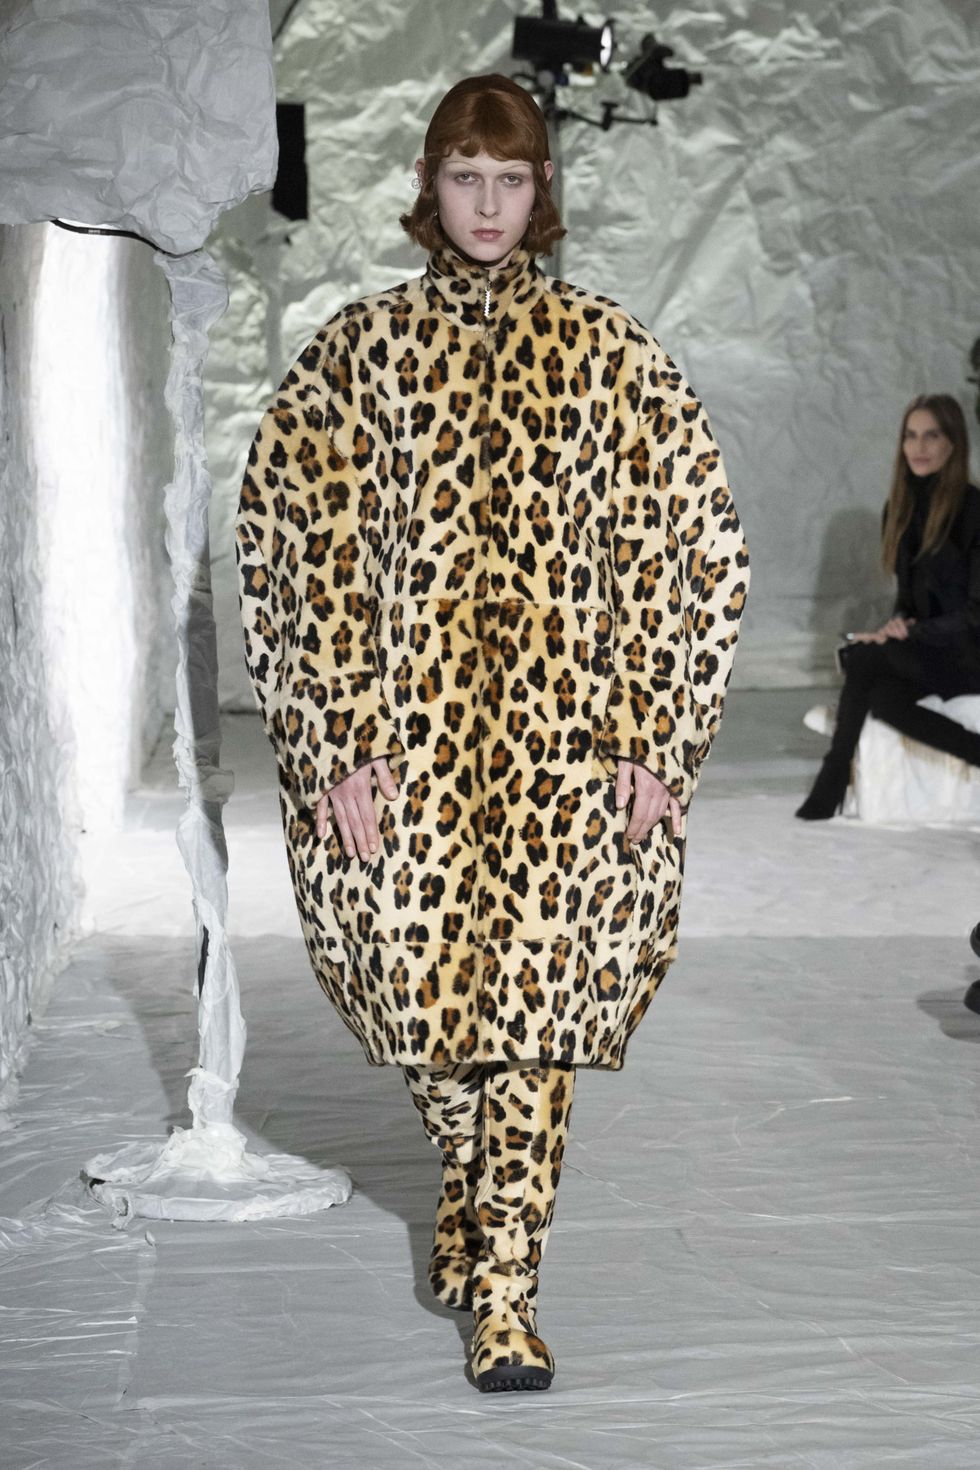 a person wearing a leopard print dress